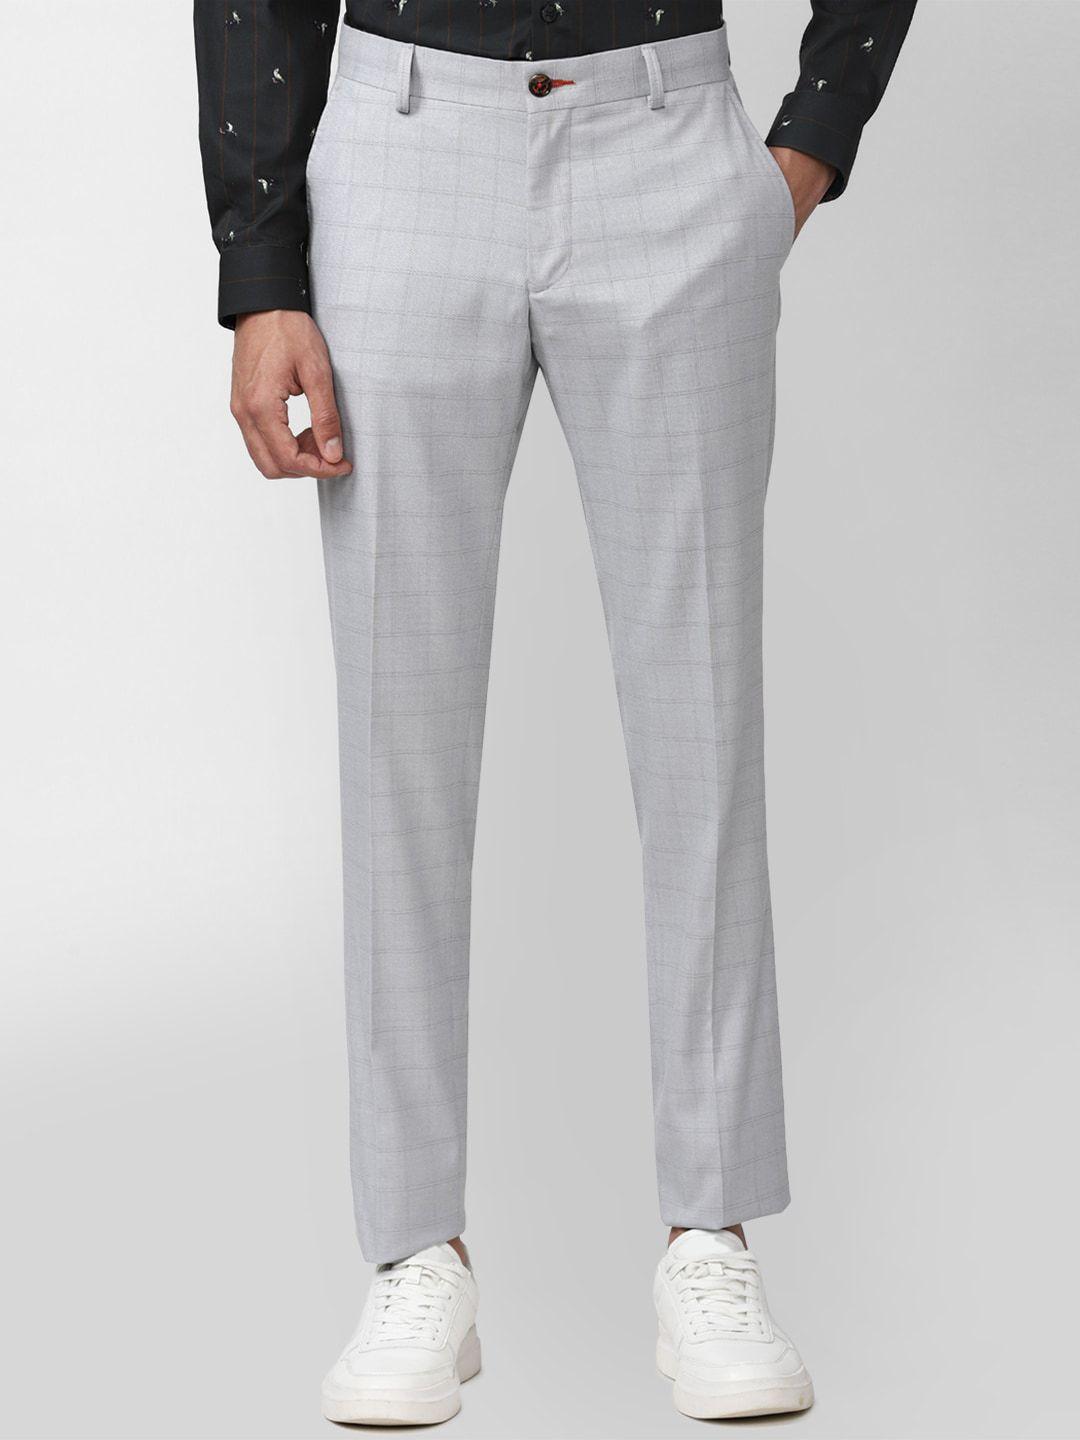 simon-carter-london-men-grey-casual-trousers